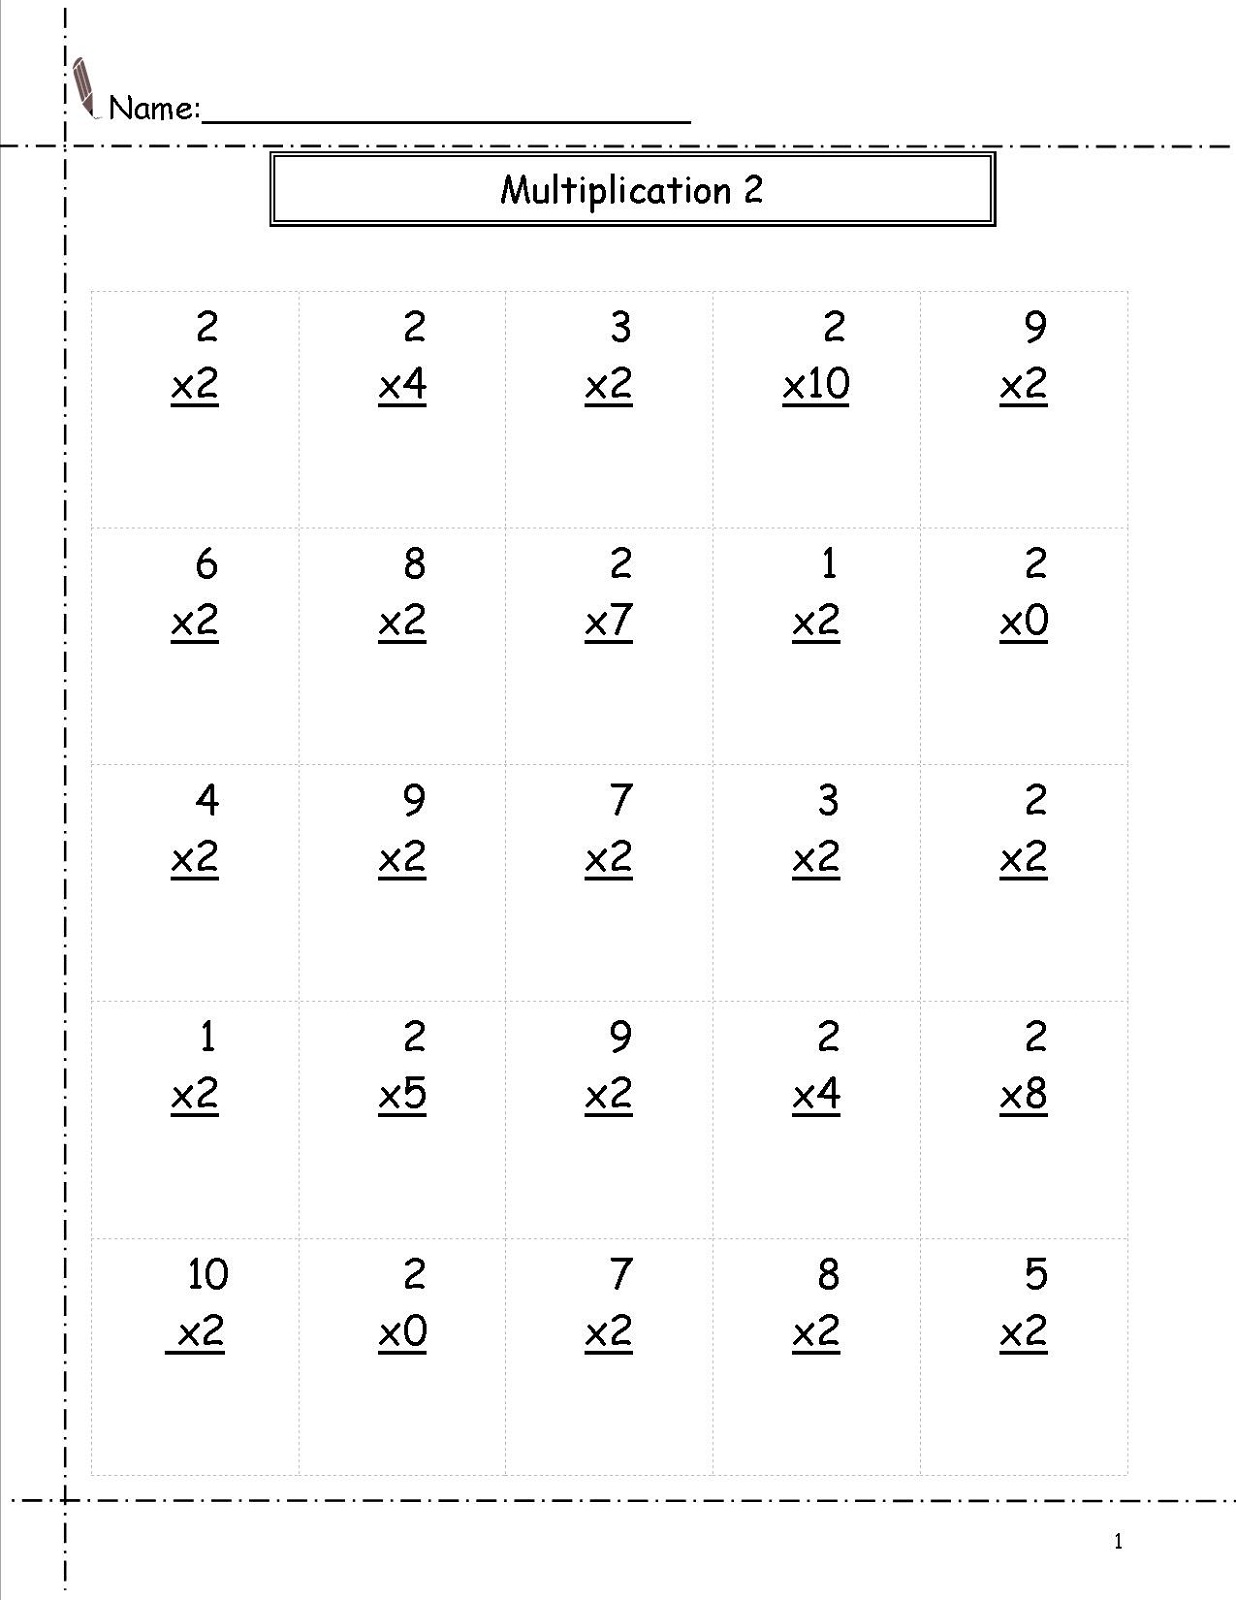 multiply-by-2-worksheet-free